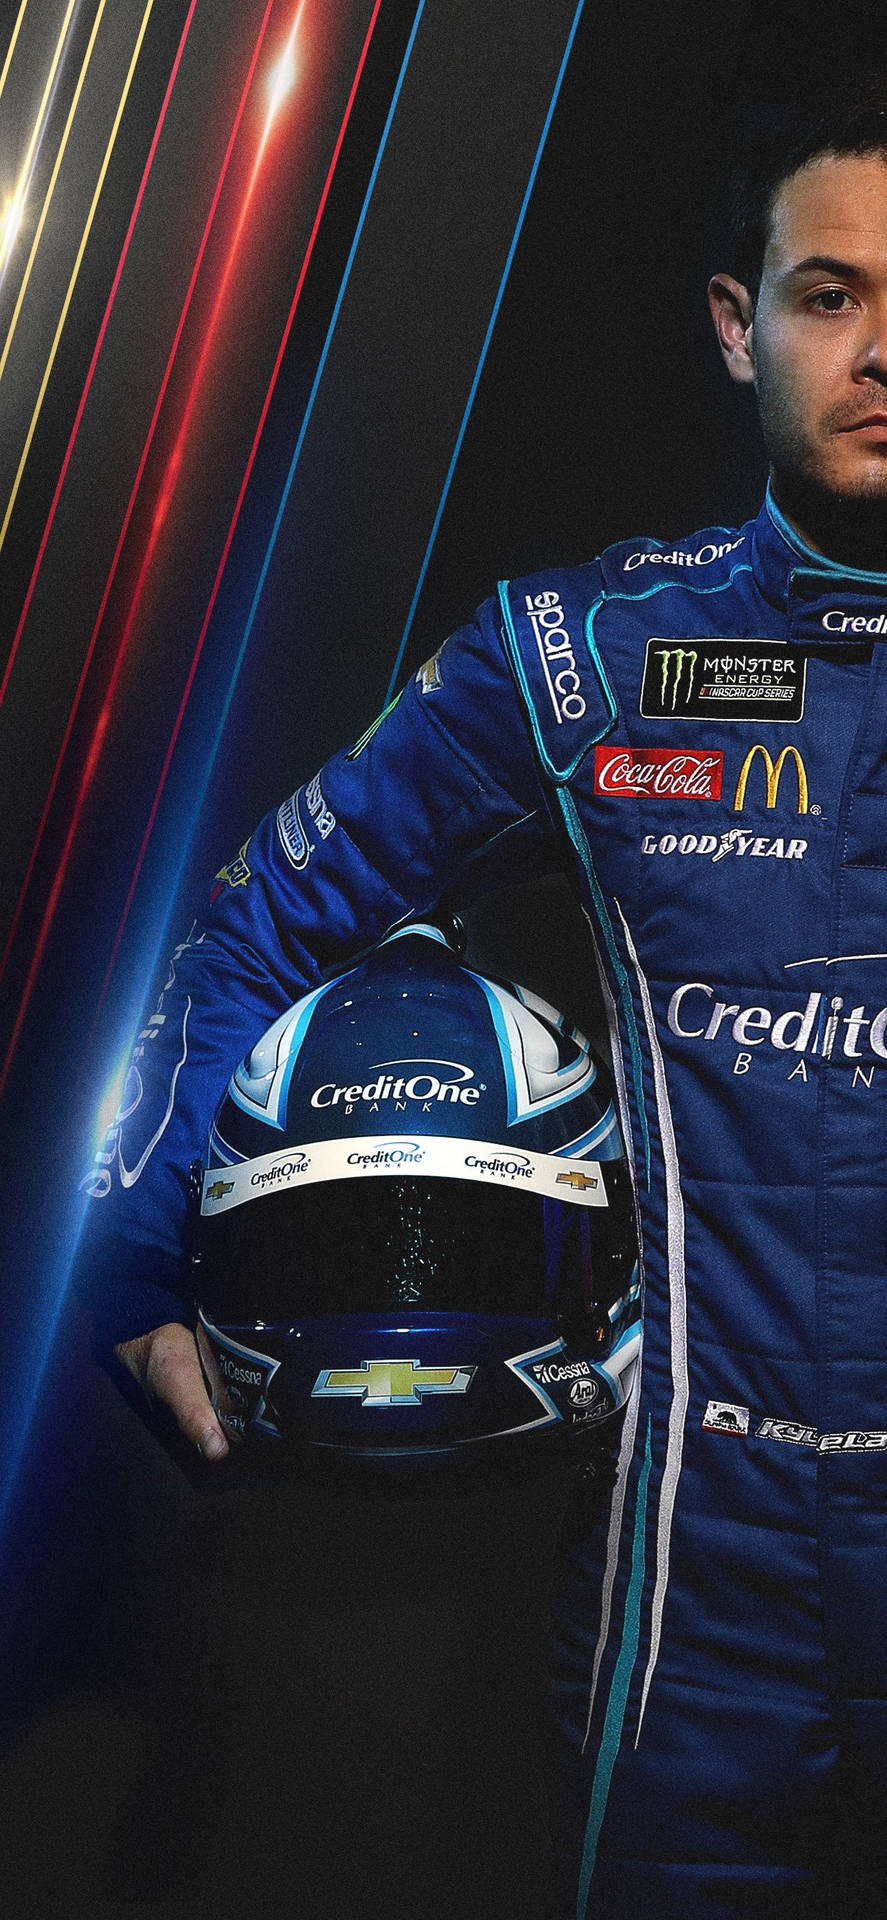 Pro Racing Driver Kyle Larson in Blue Suit Wallpaper